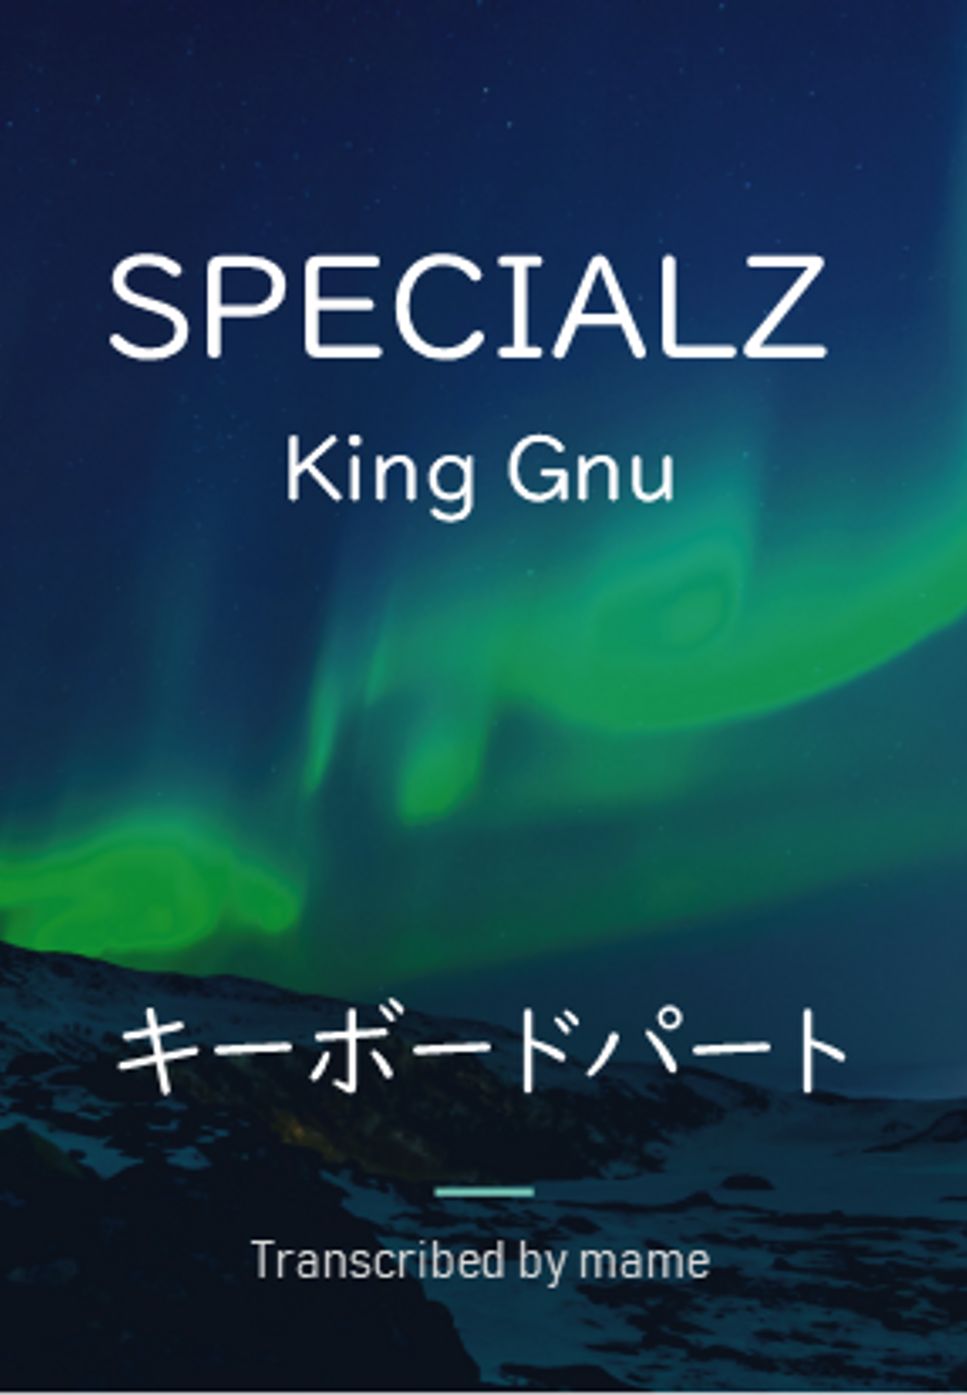 King Gnu - SPECIALZ (keyboard part) by mame